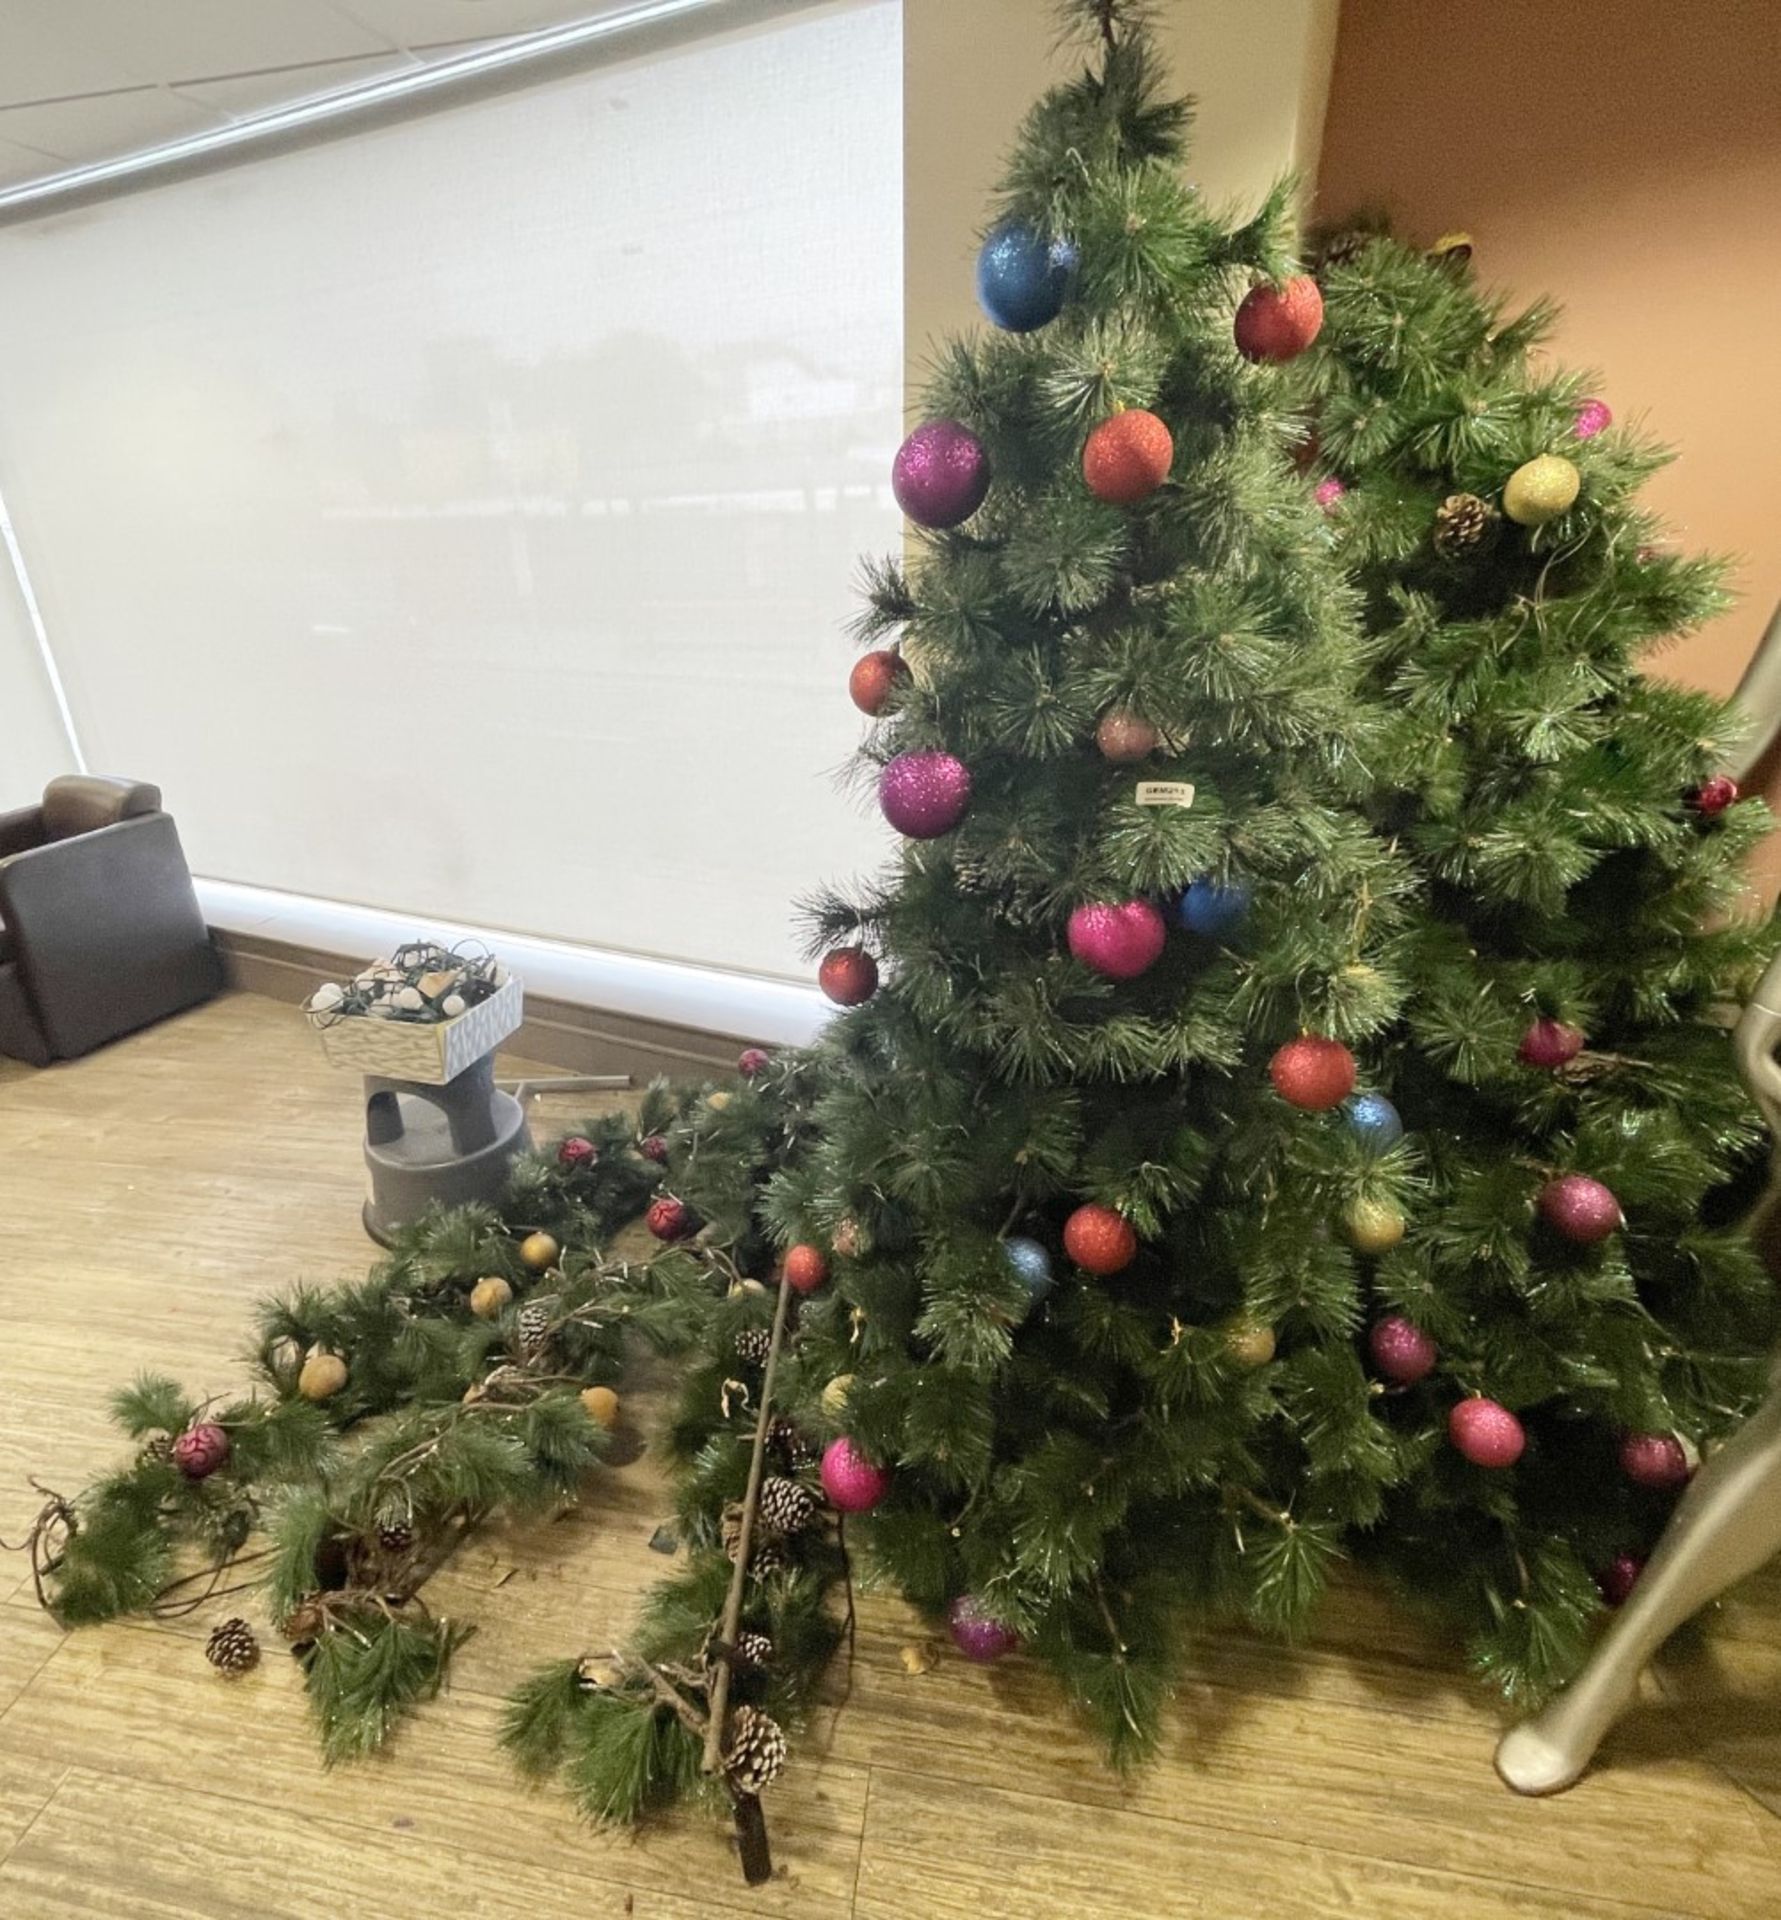 1 x Christmas Tree With Assorted Decorations - CL670 - Ref: GEM213 - Location: Gravesend, DA11